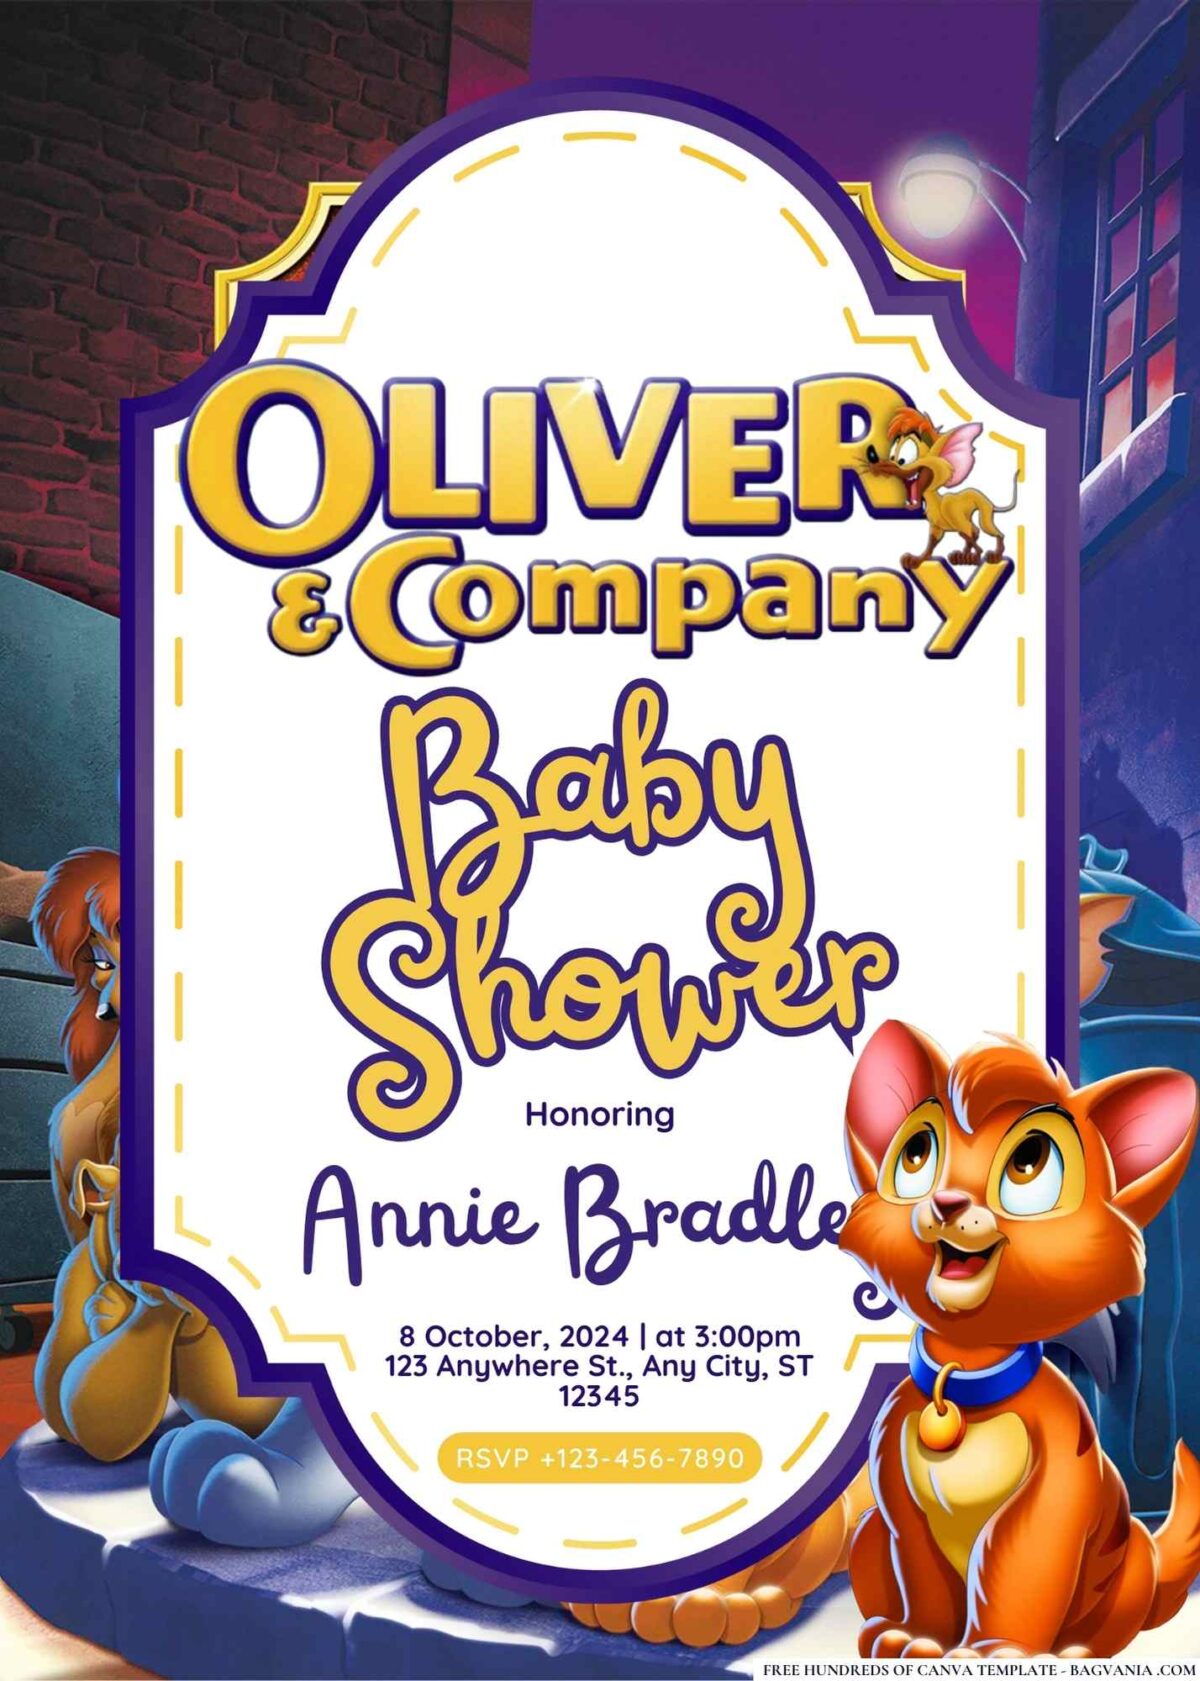 FREE Editable Oliver & Company Baby Shower Invitation